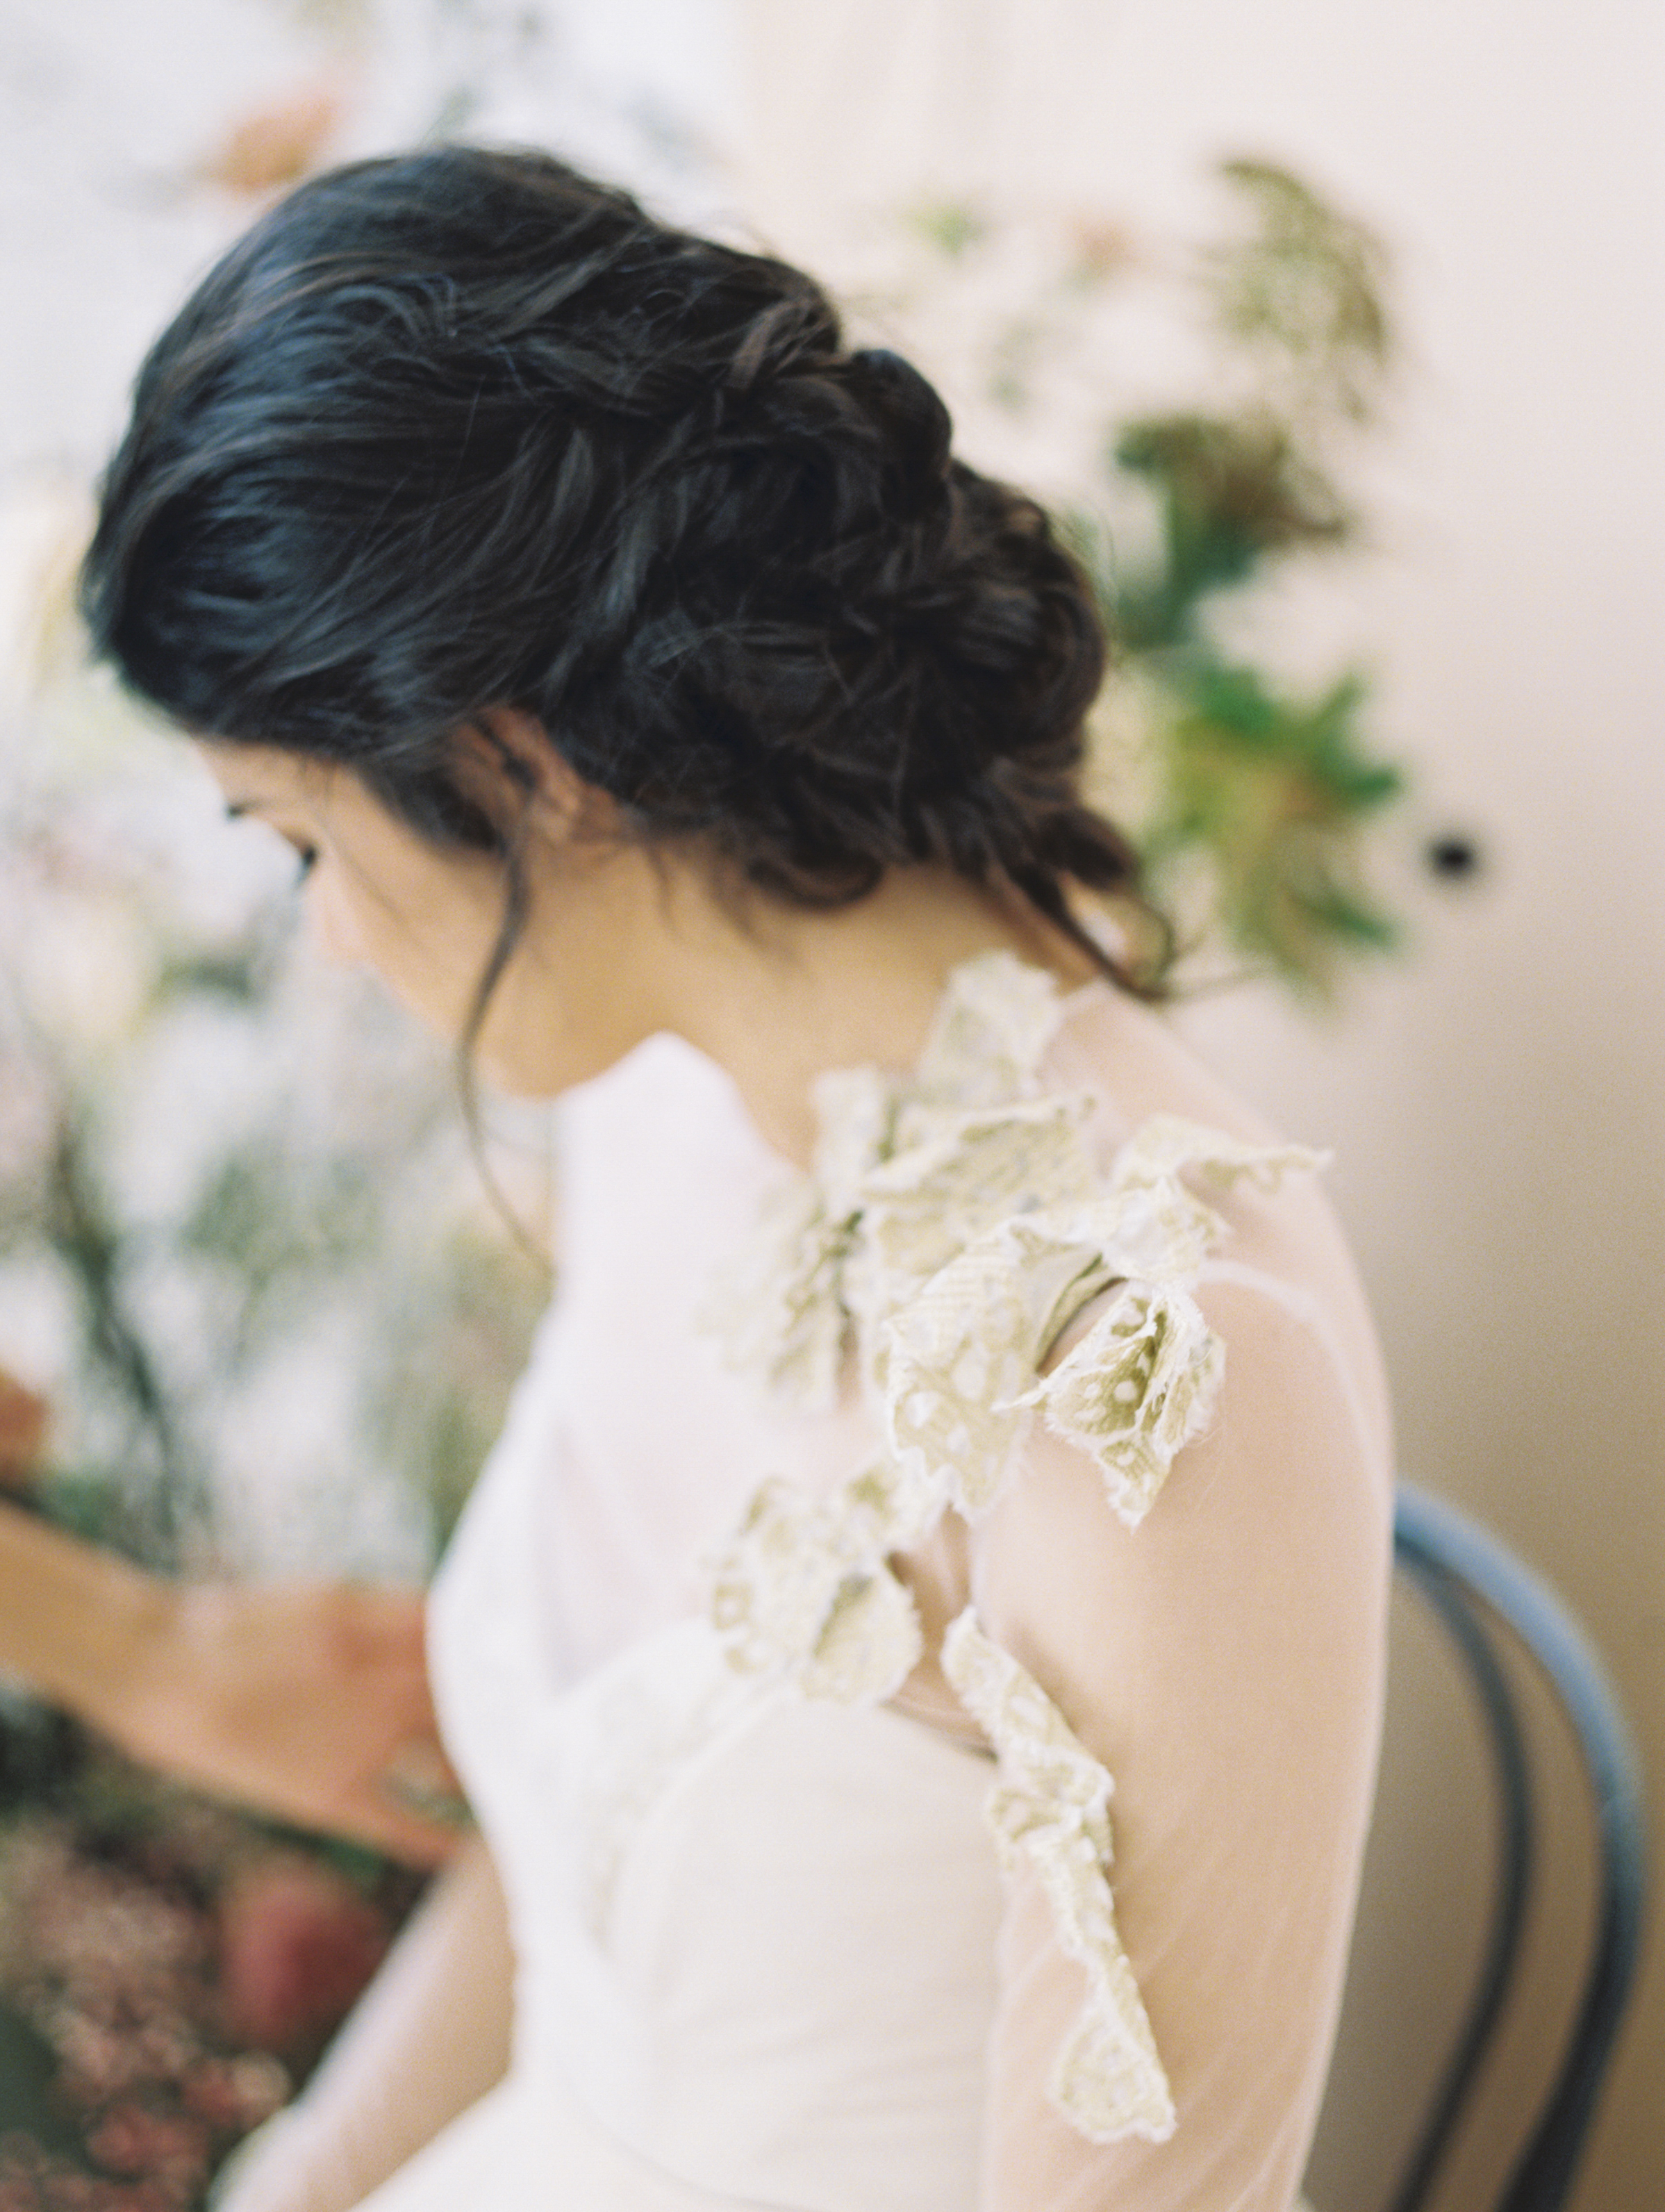 Carol Hannah fritillary wedding dress kensington skirt-1-275Carol Hannah fritillary wedding dress kensington skirt-1-275.JPG